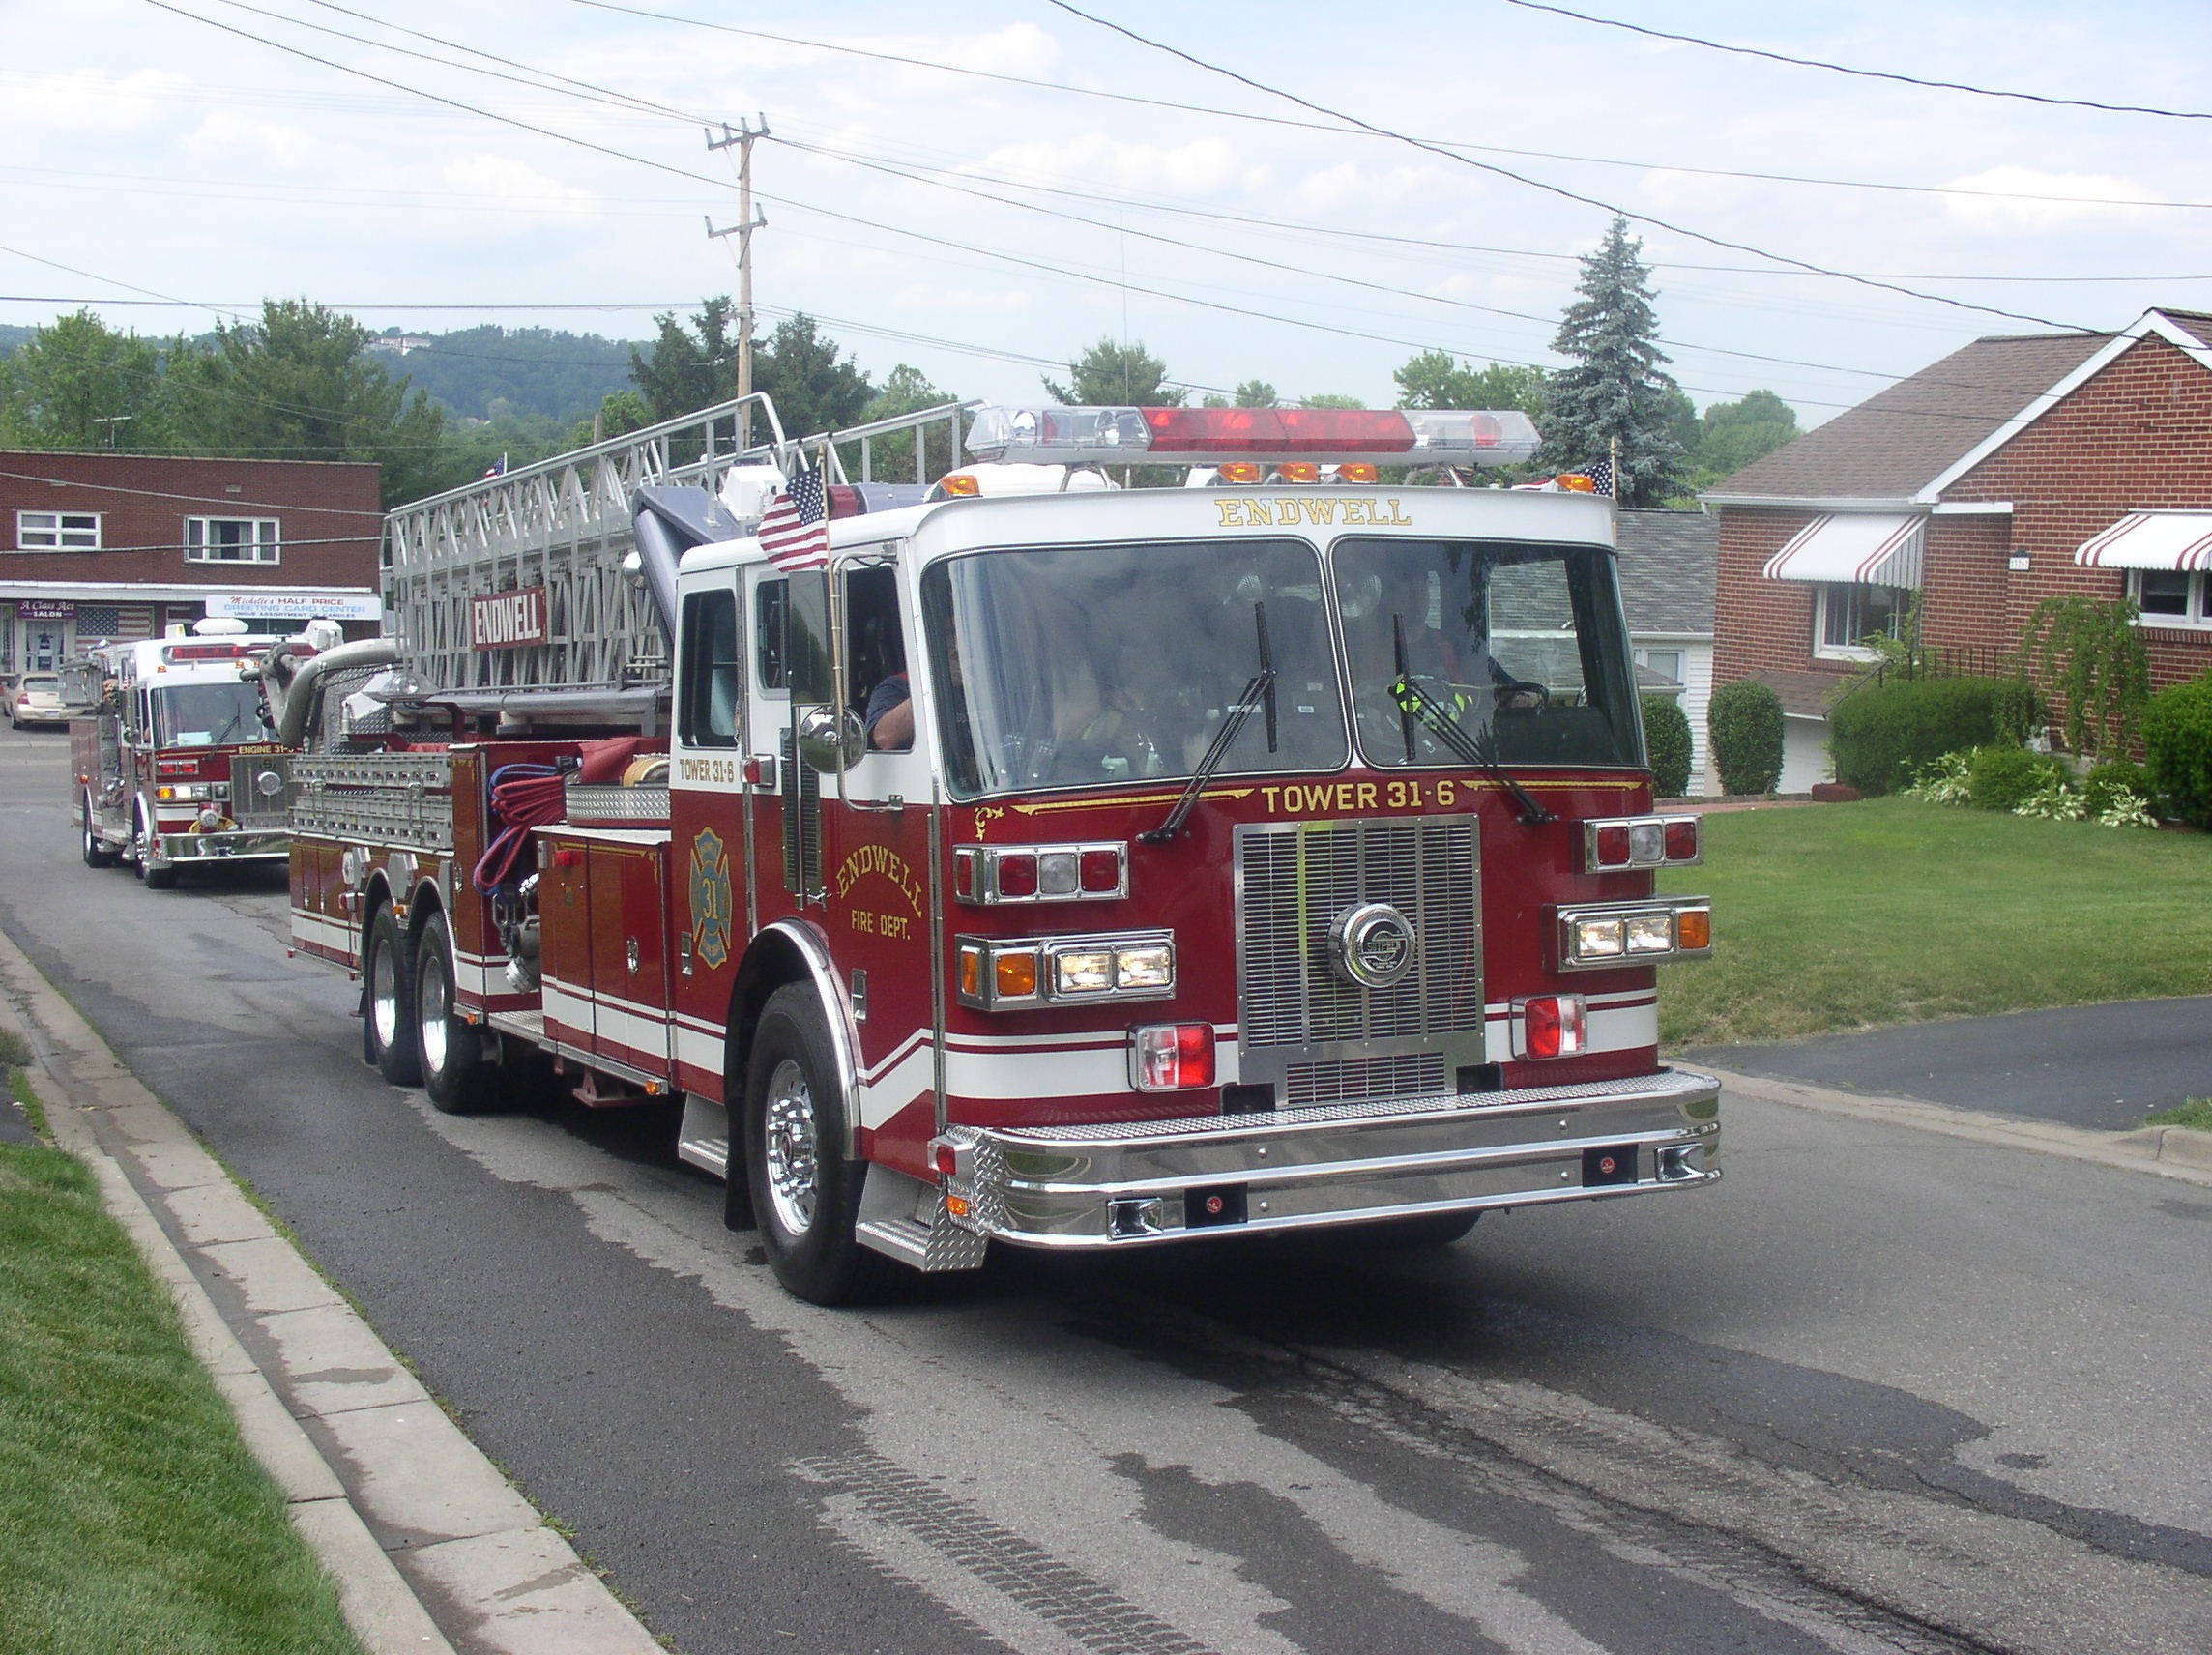 06-16-04  Response - Fire - 325 Taylor